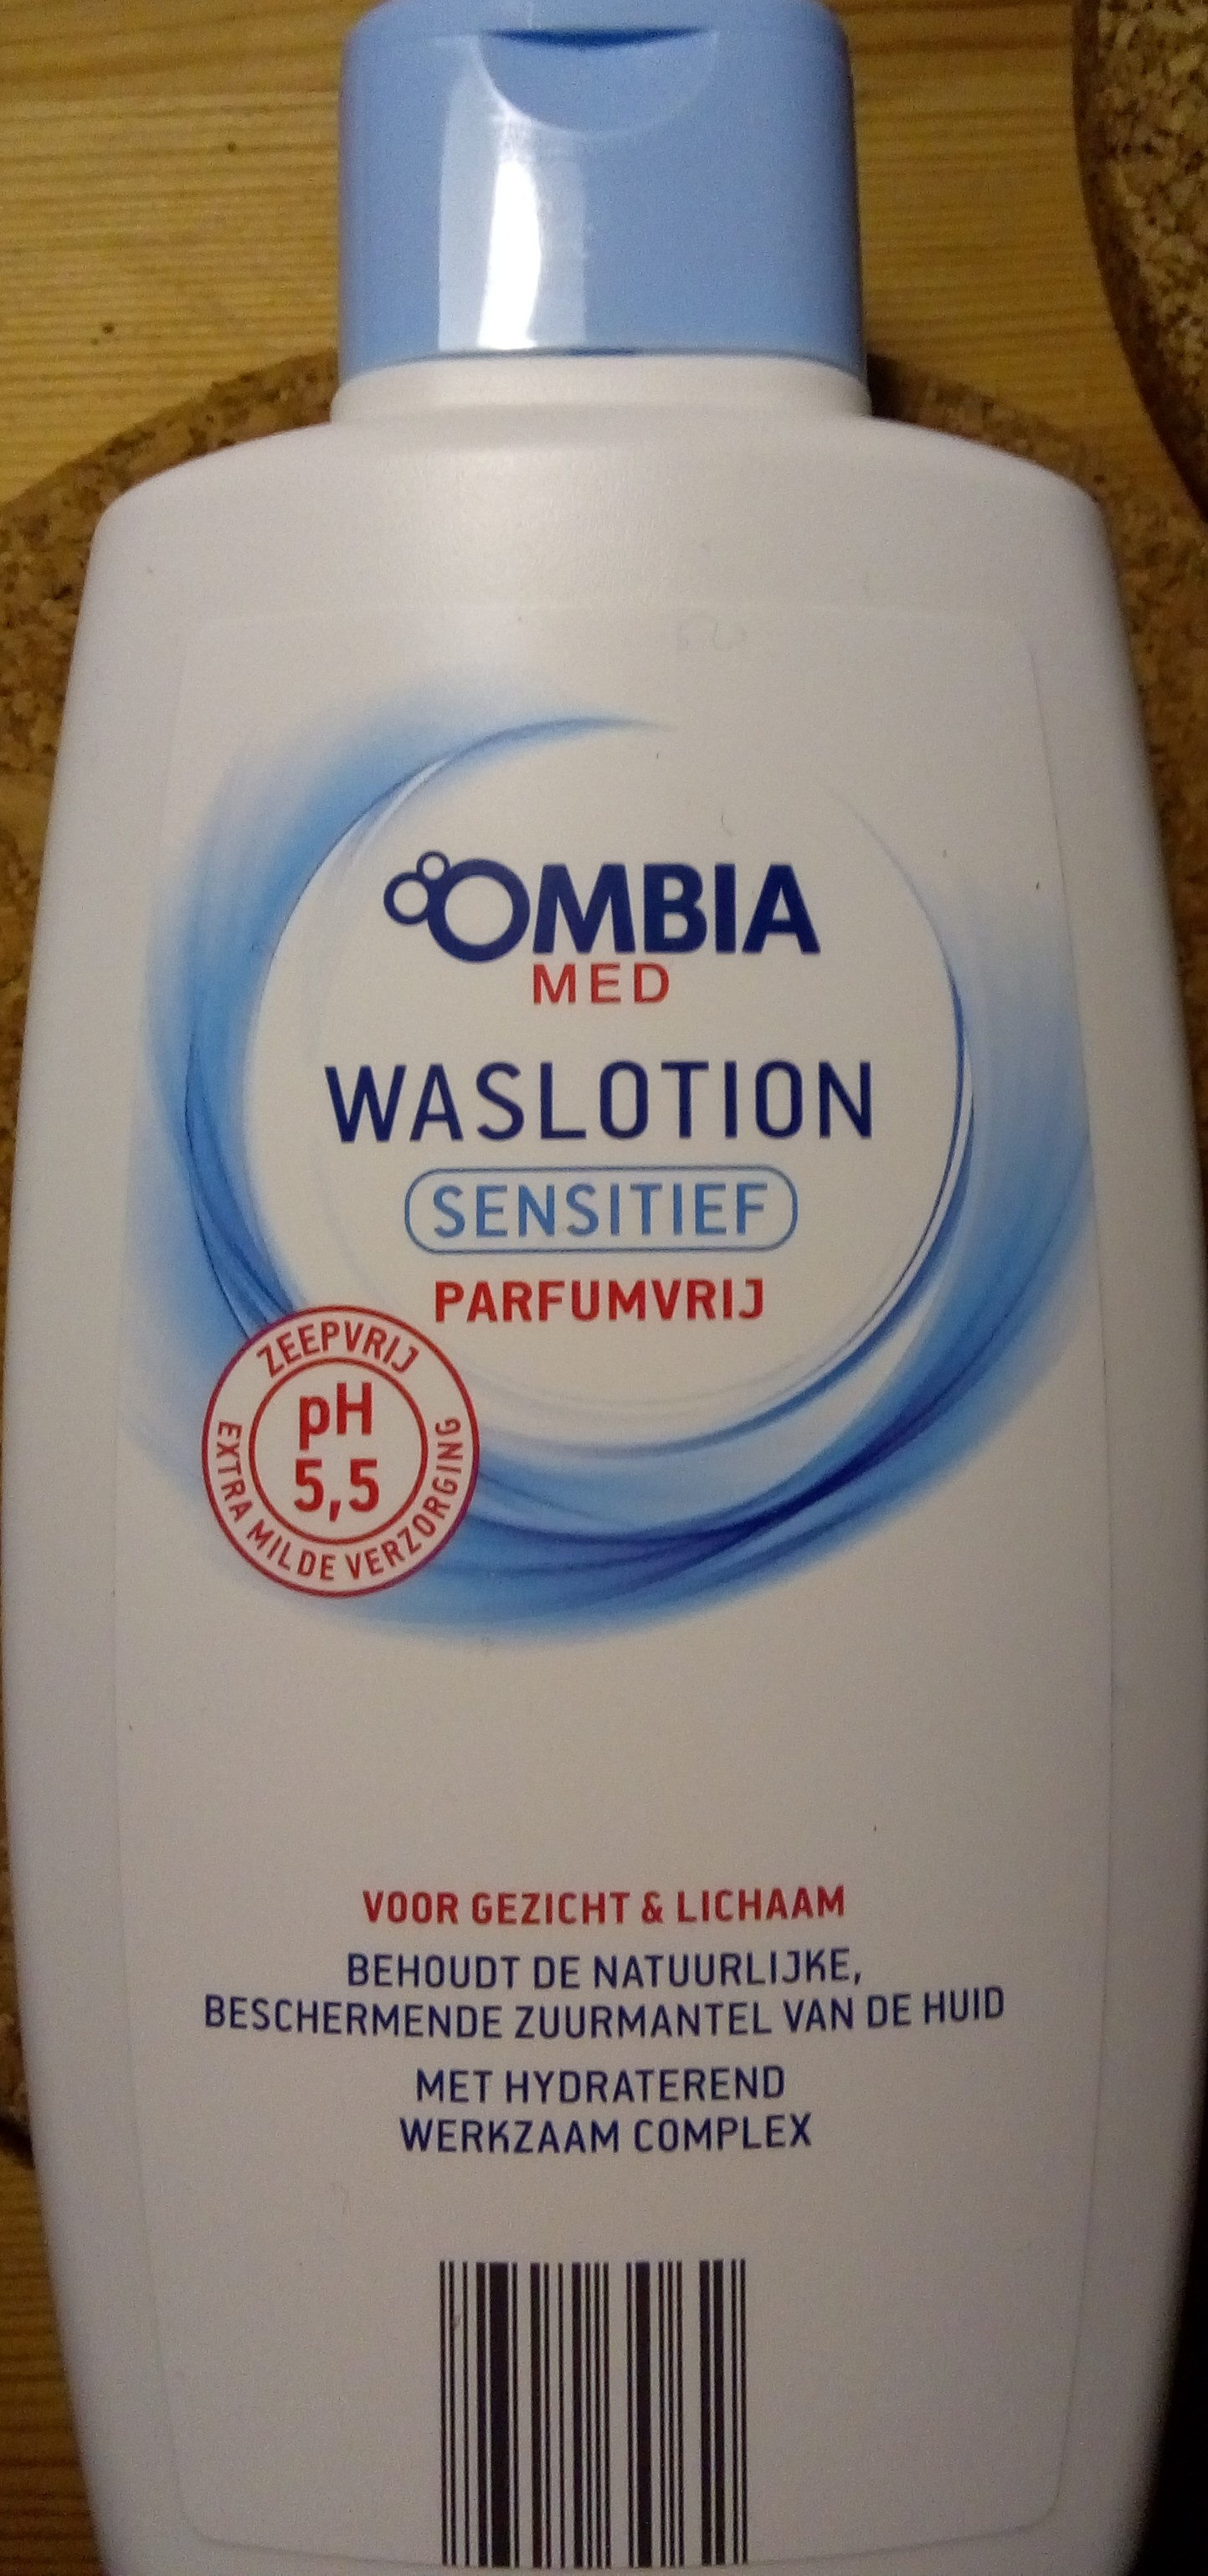 Ombia Med waslotion sensitief - Produkt - nl